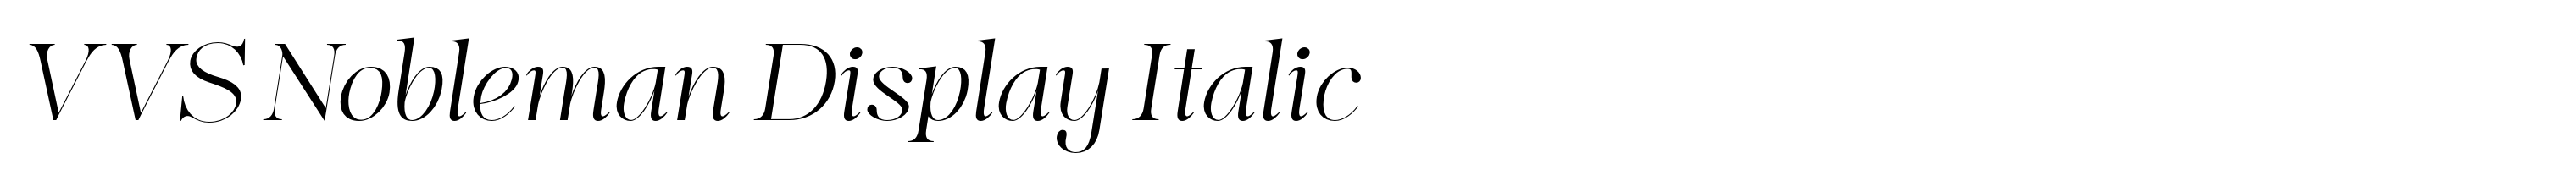 VVS Nobleman Display Italic